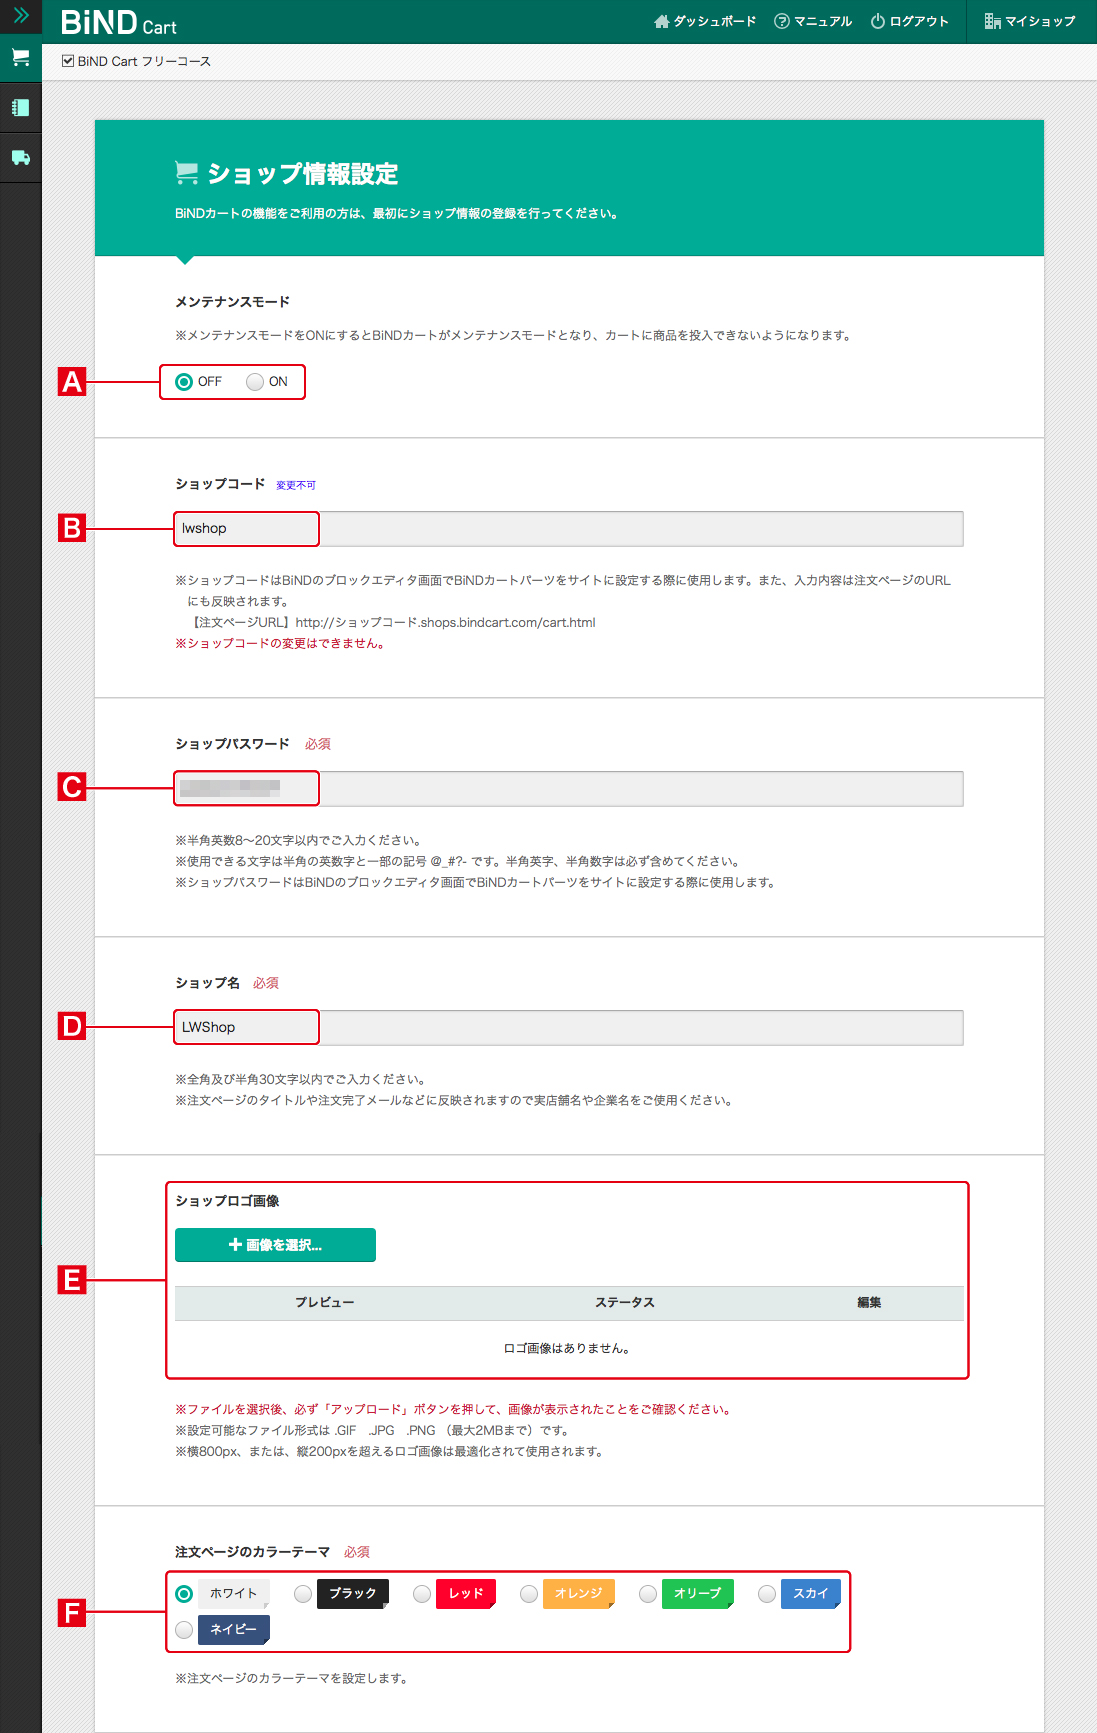 http://www.digitalstage.jp/support/bindcart/manual/fc3-1_02c.jpg